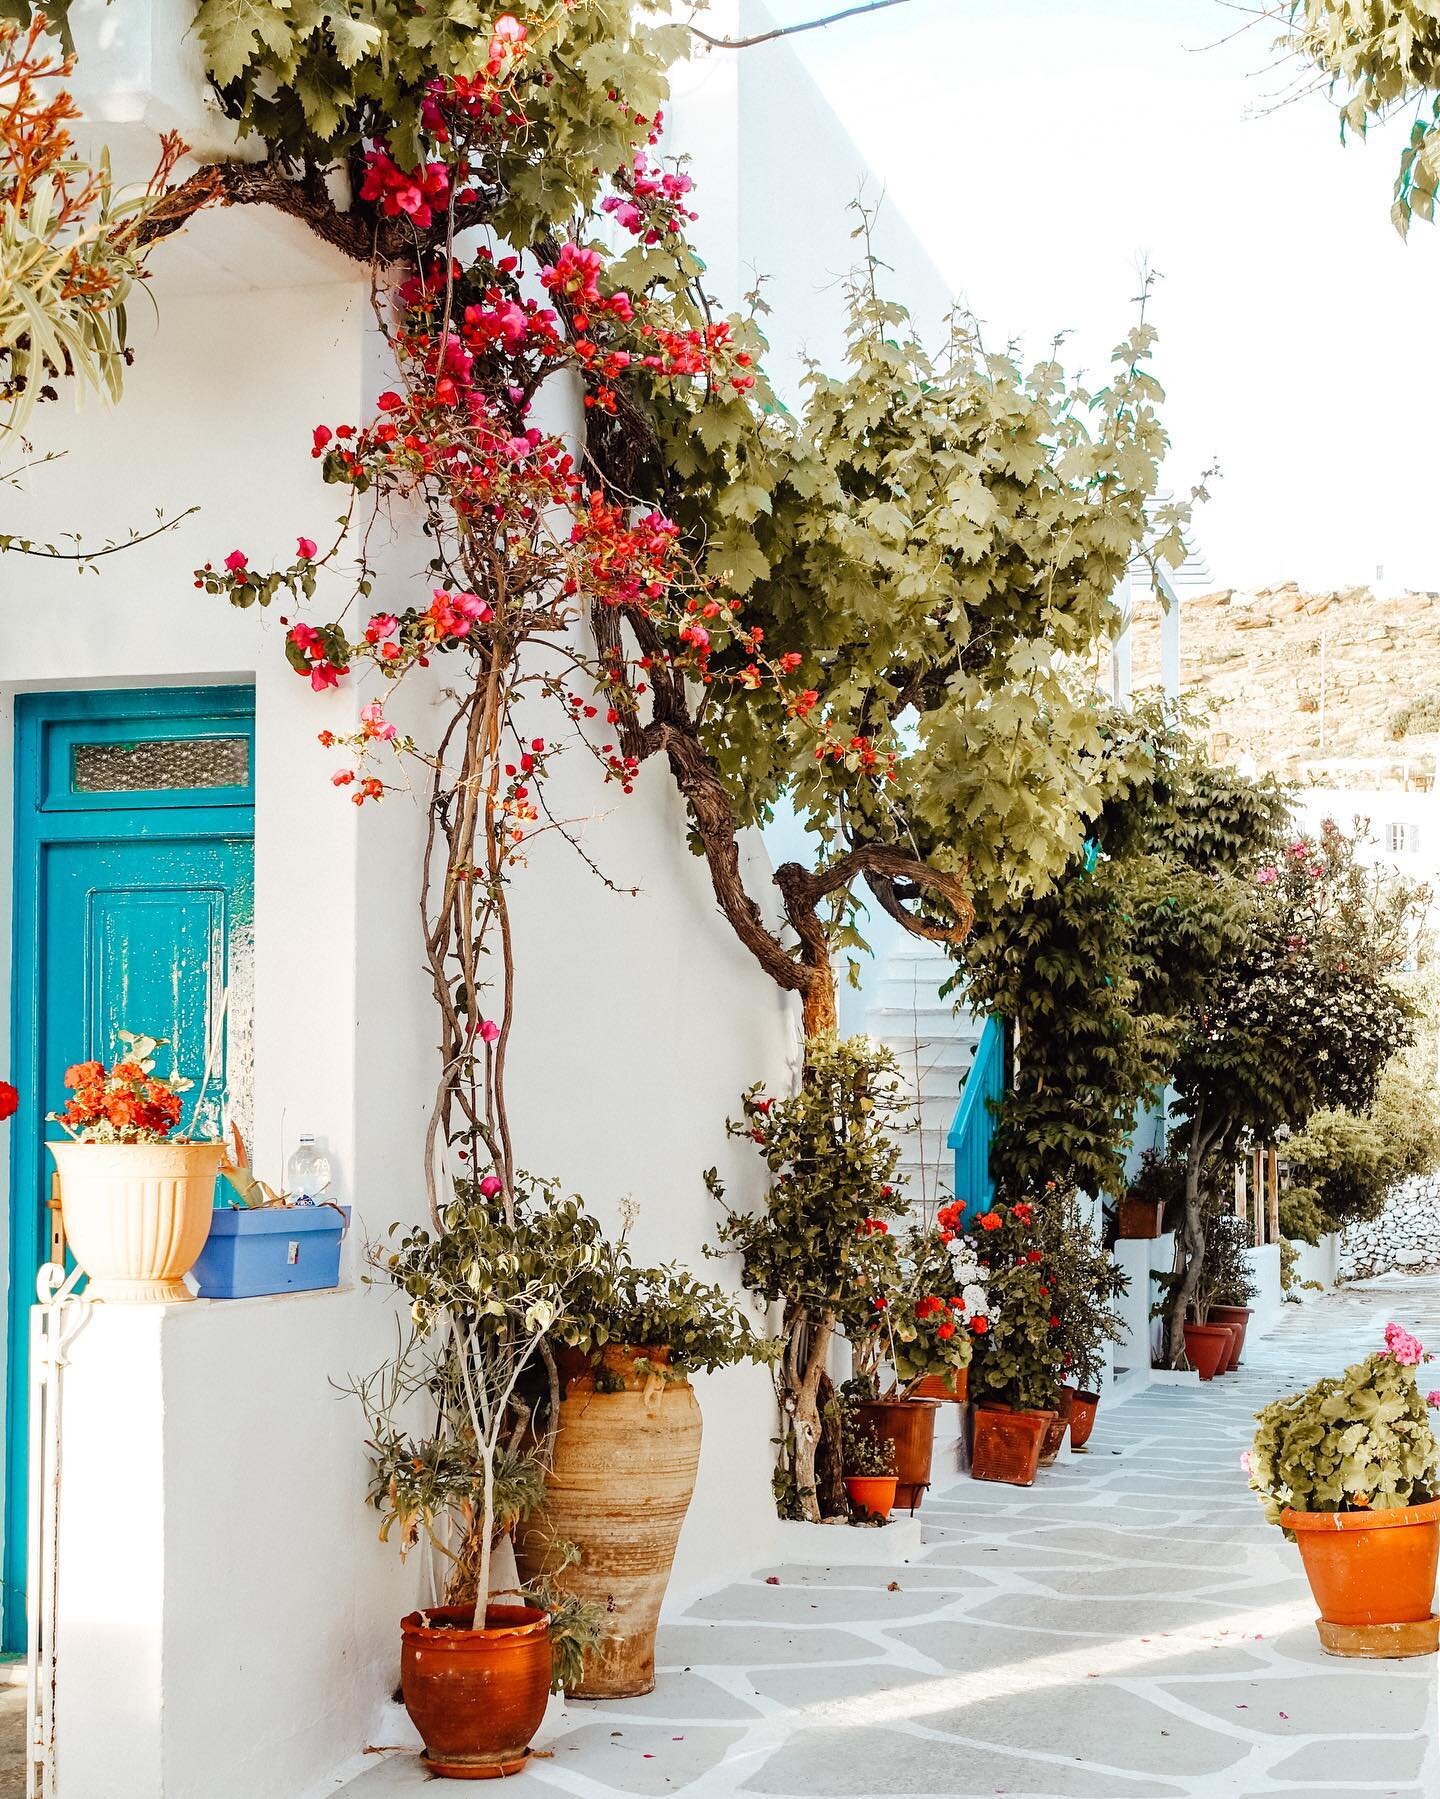 Little unexpected alleyways of Mykonos. I miss the food in Greece 🤤 ⠀
⠀
⠀
.⠀
.⠀
.⠀
.⠀
.⠀
.⠀
⠀
#thecitysidewalks #theprettycities #theeverygirltravels #suitcasetravels #culturetrip #insidertravel #passionpassport #pathport #prettylittletrips #mytinya